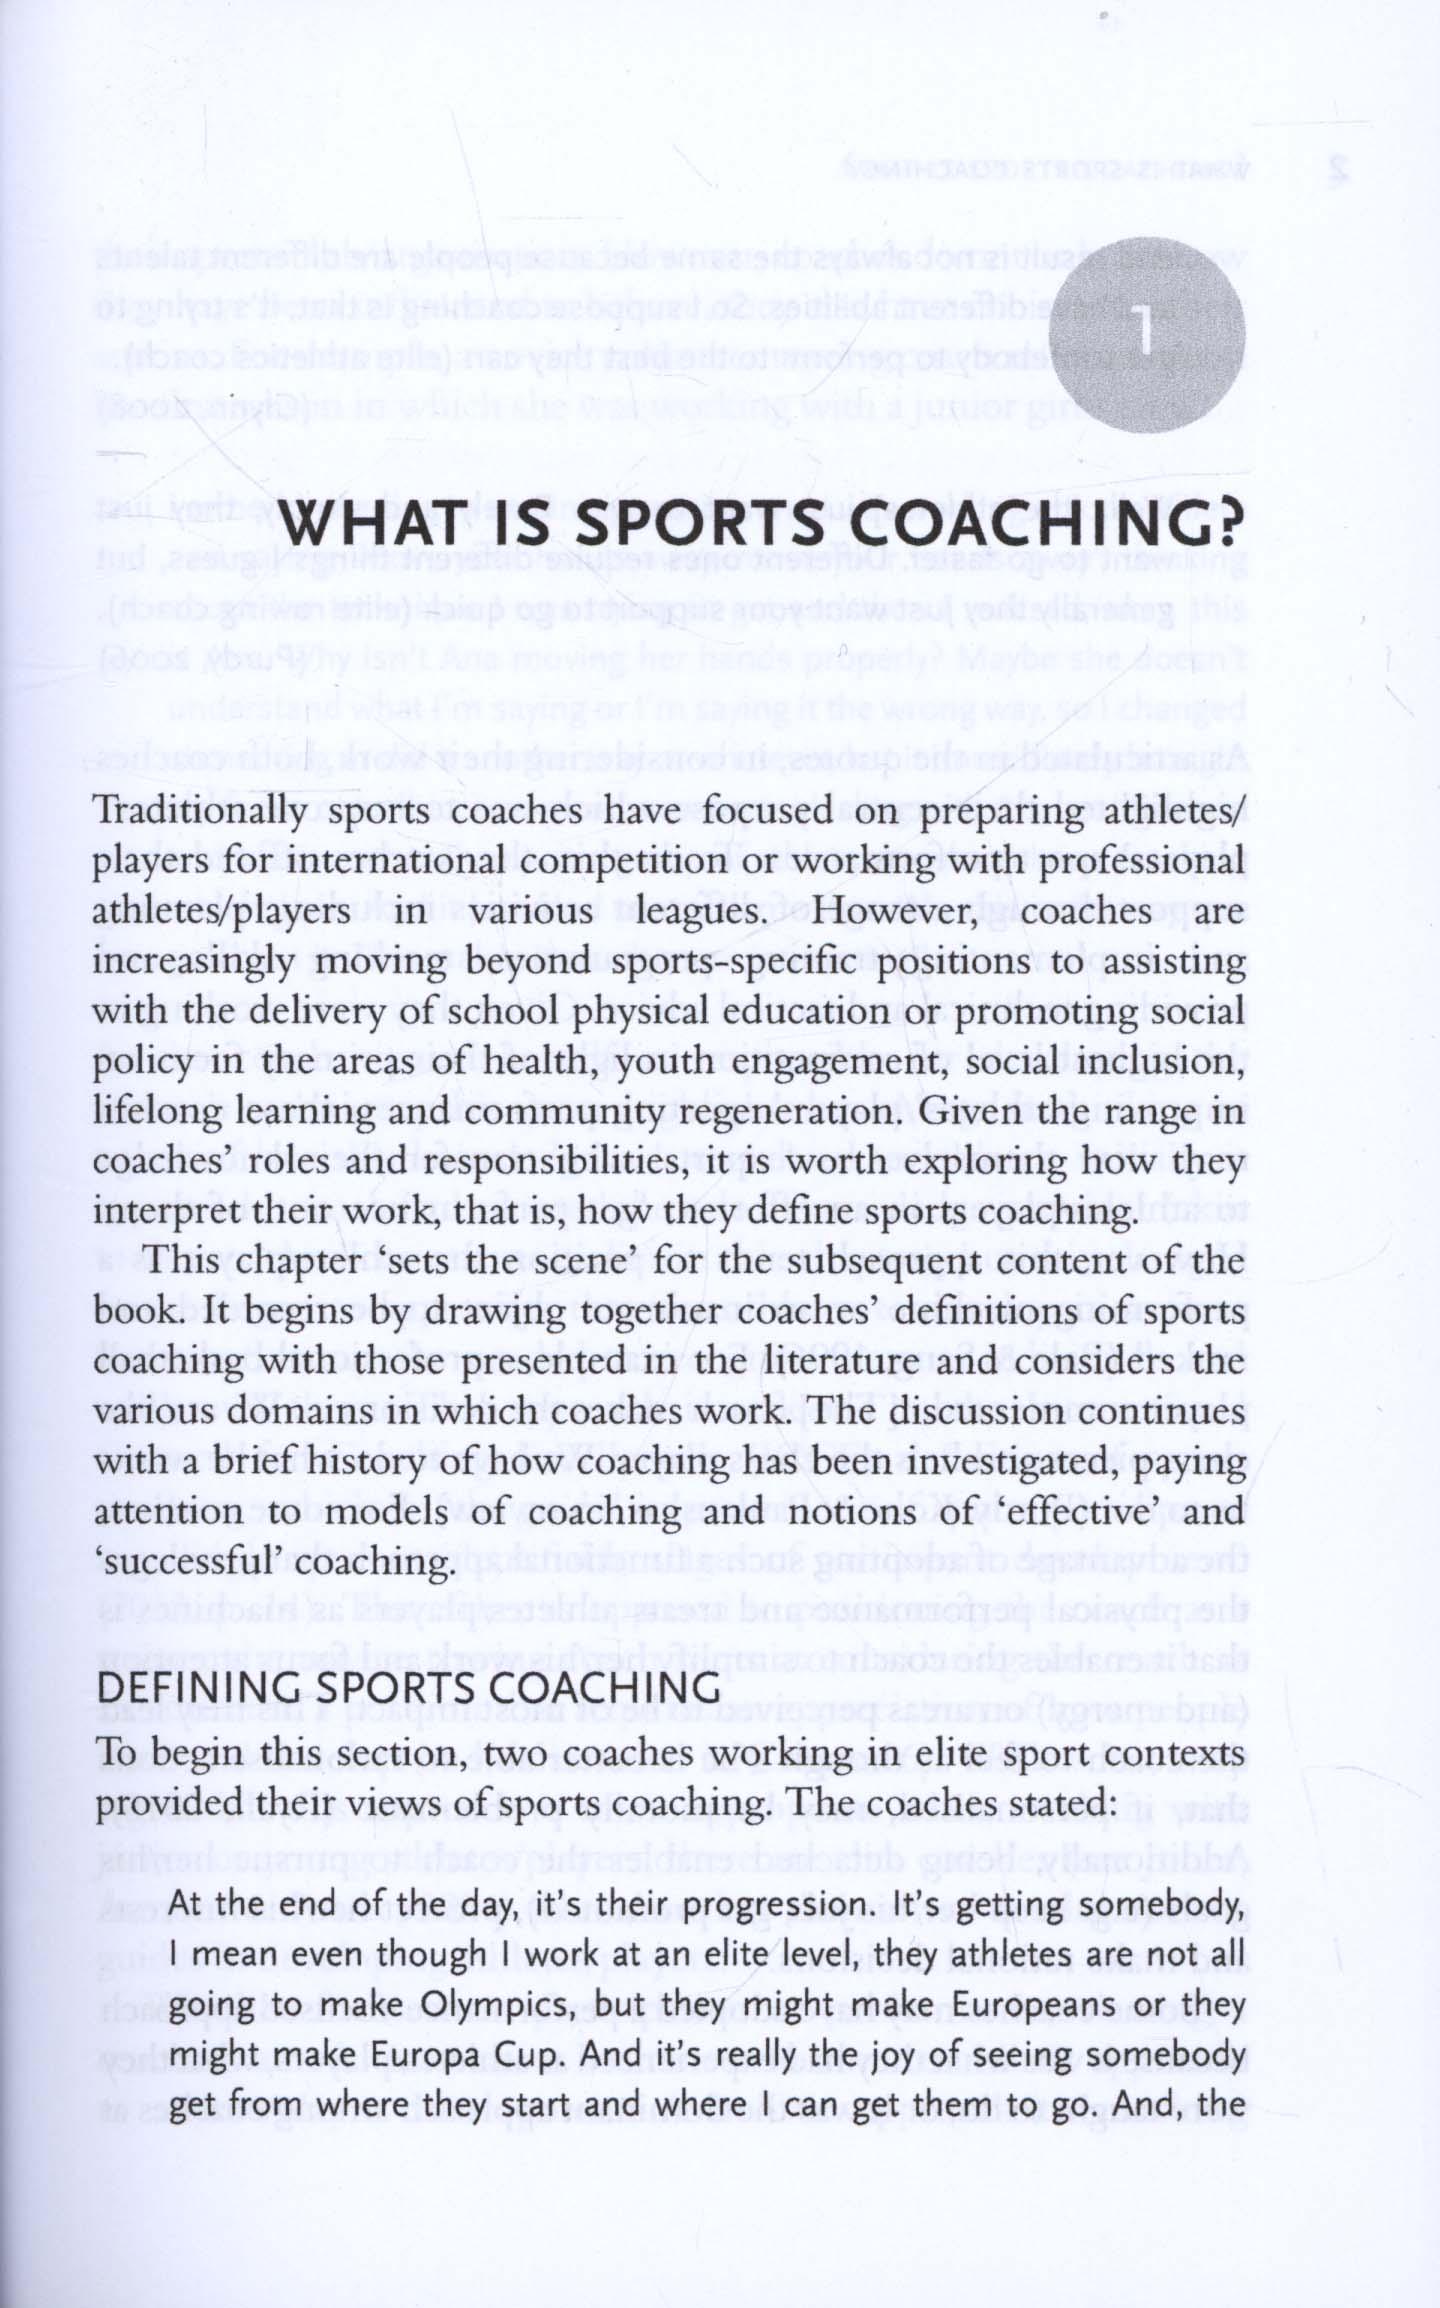 Sports Coaching: The Basics